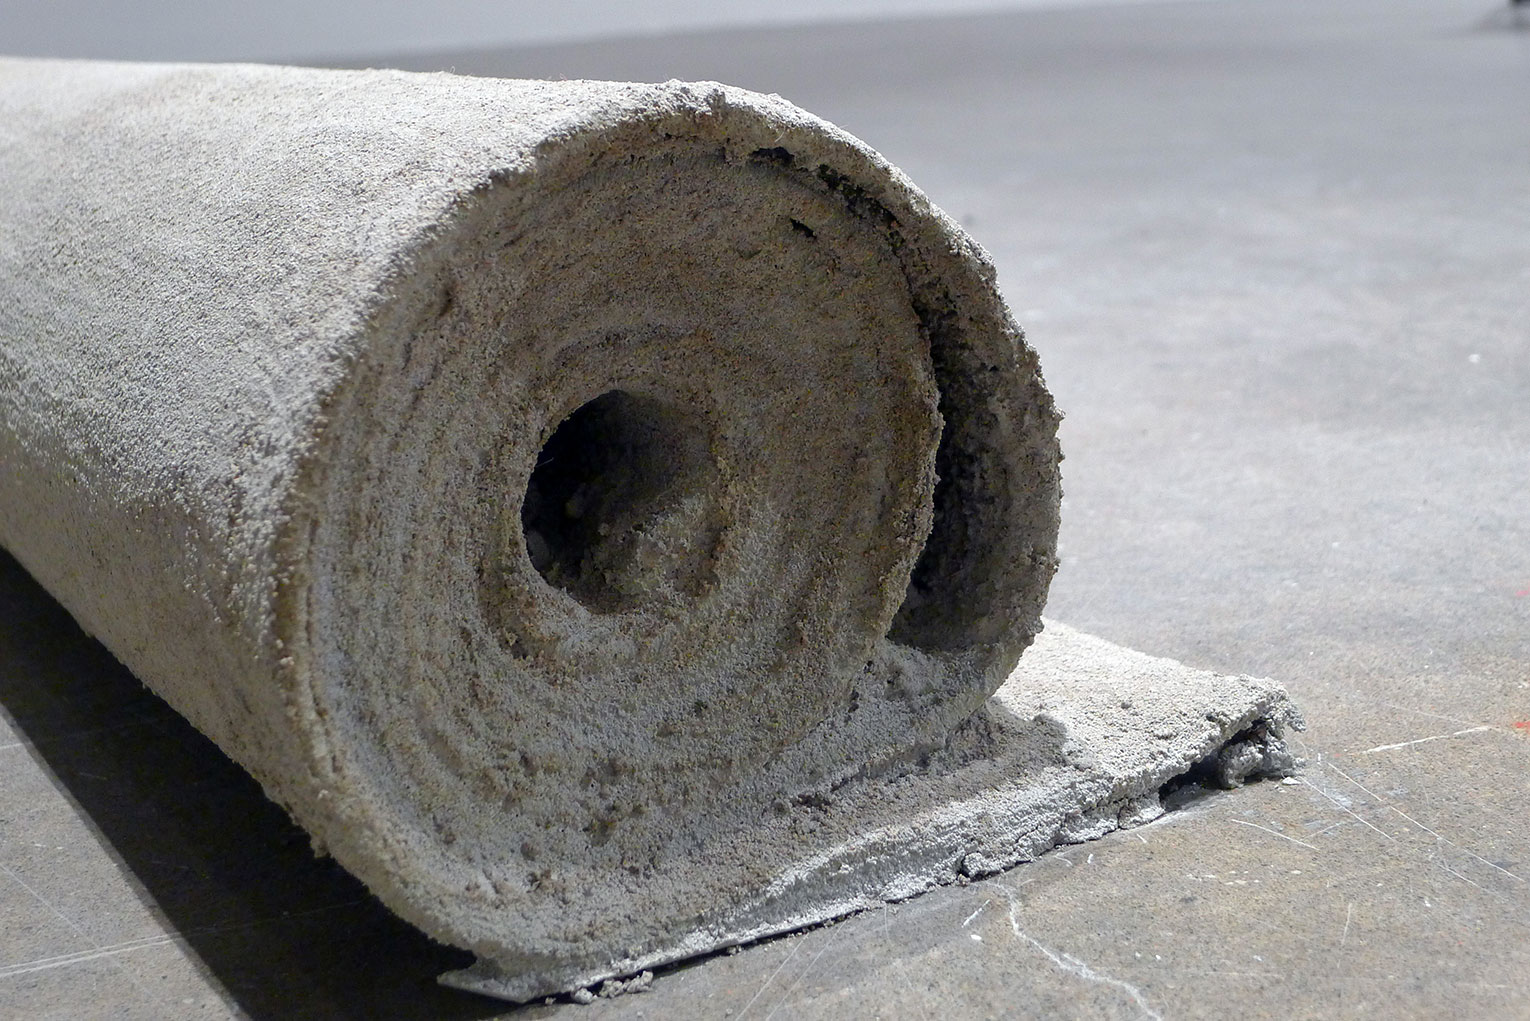 <b>Title: </b>Untitled (Rug)<br /><b>Year: </b>2014<br /><b>Medium: </b>Cement soaked rug<br /><b>Size: </b>Dimensions variable